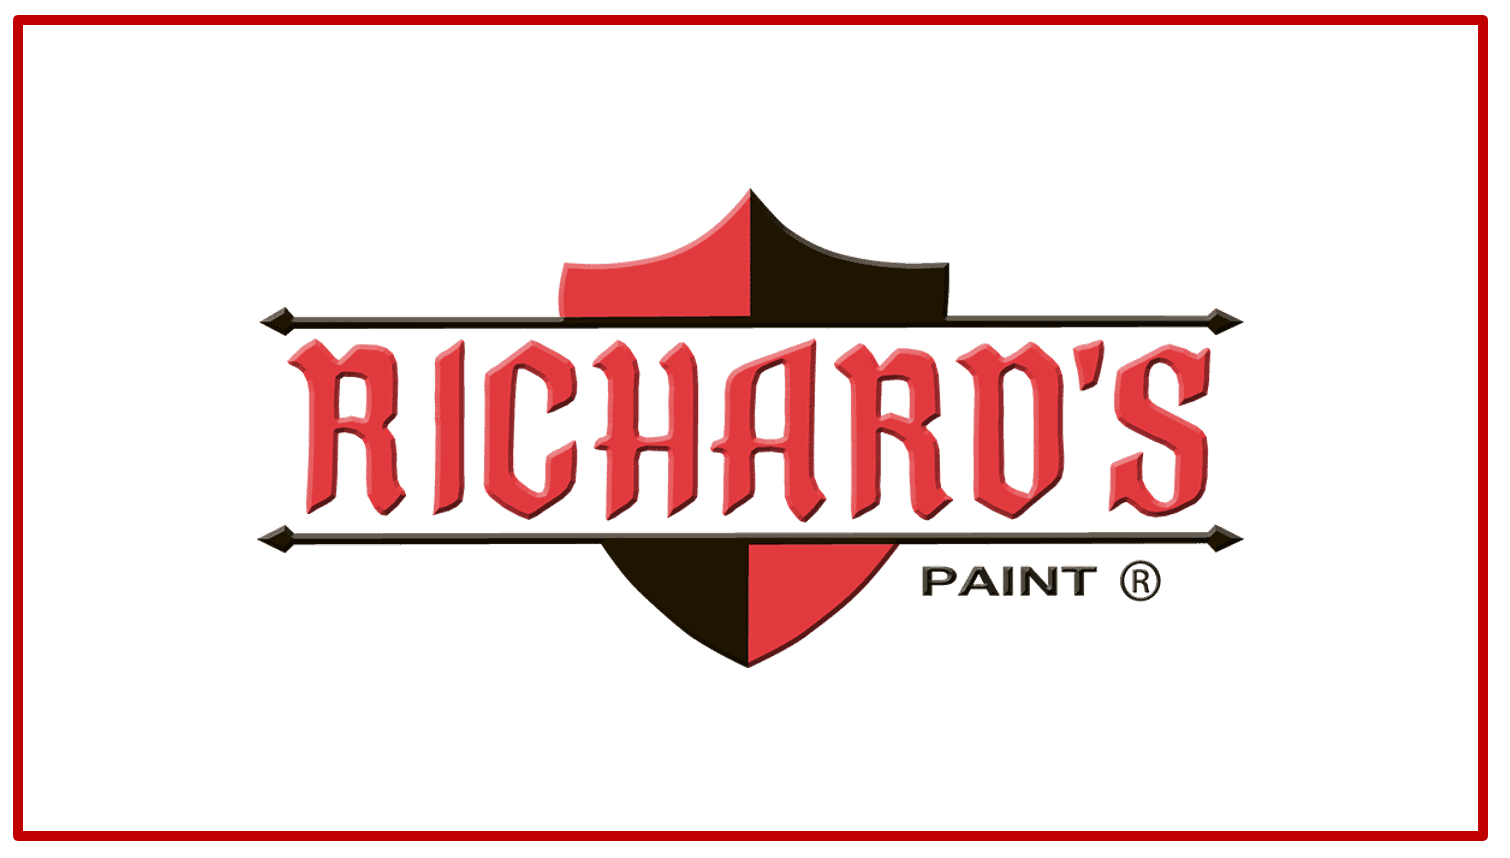 Richard's Paint2